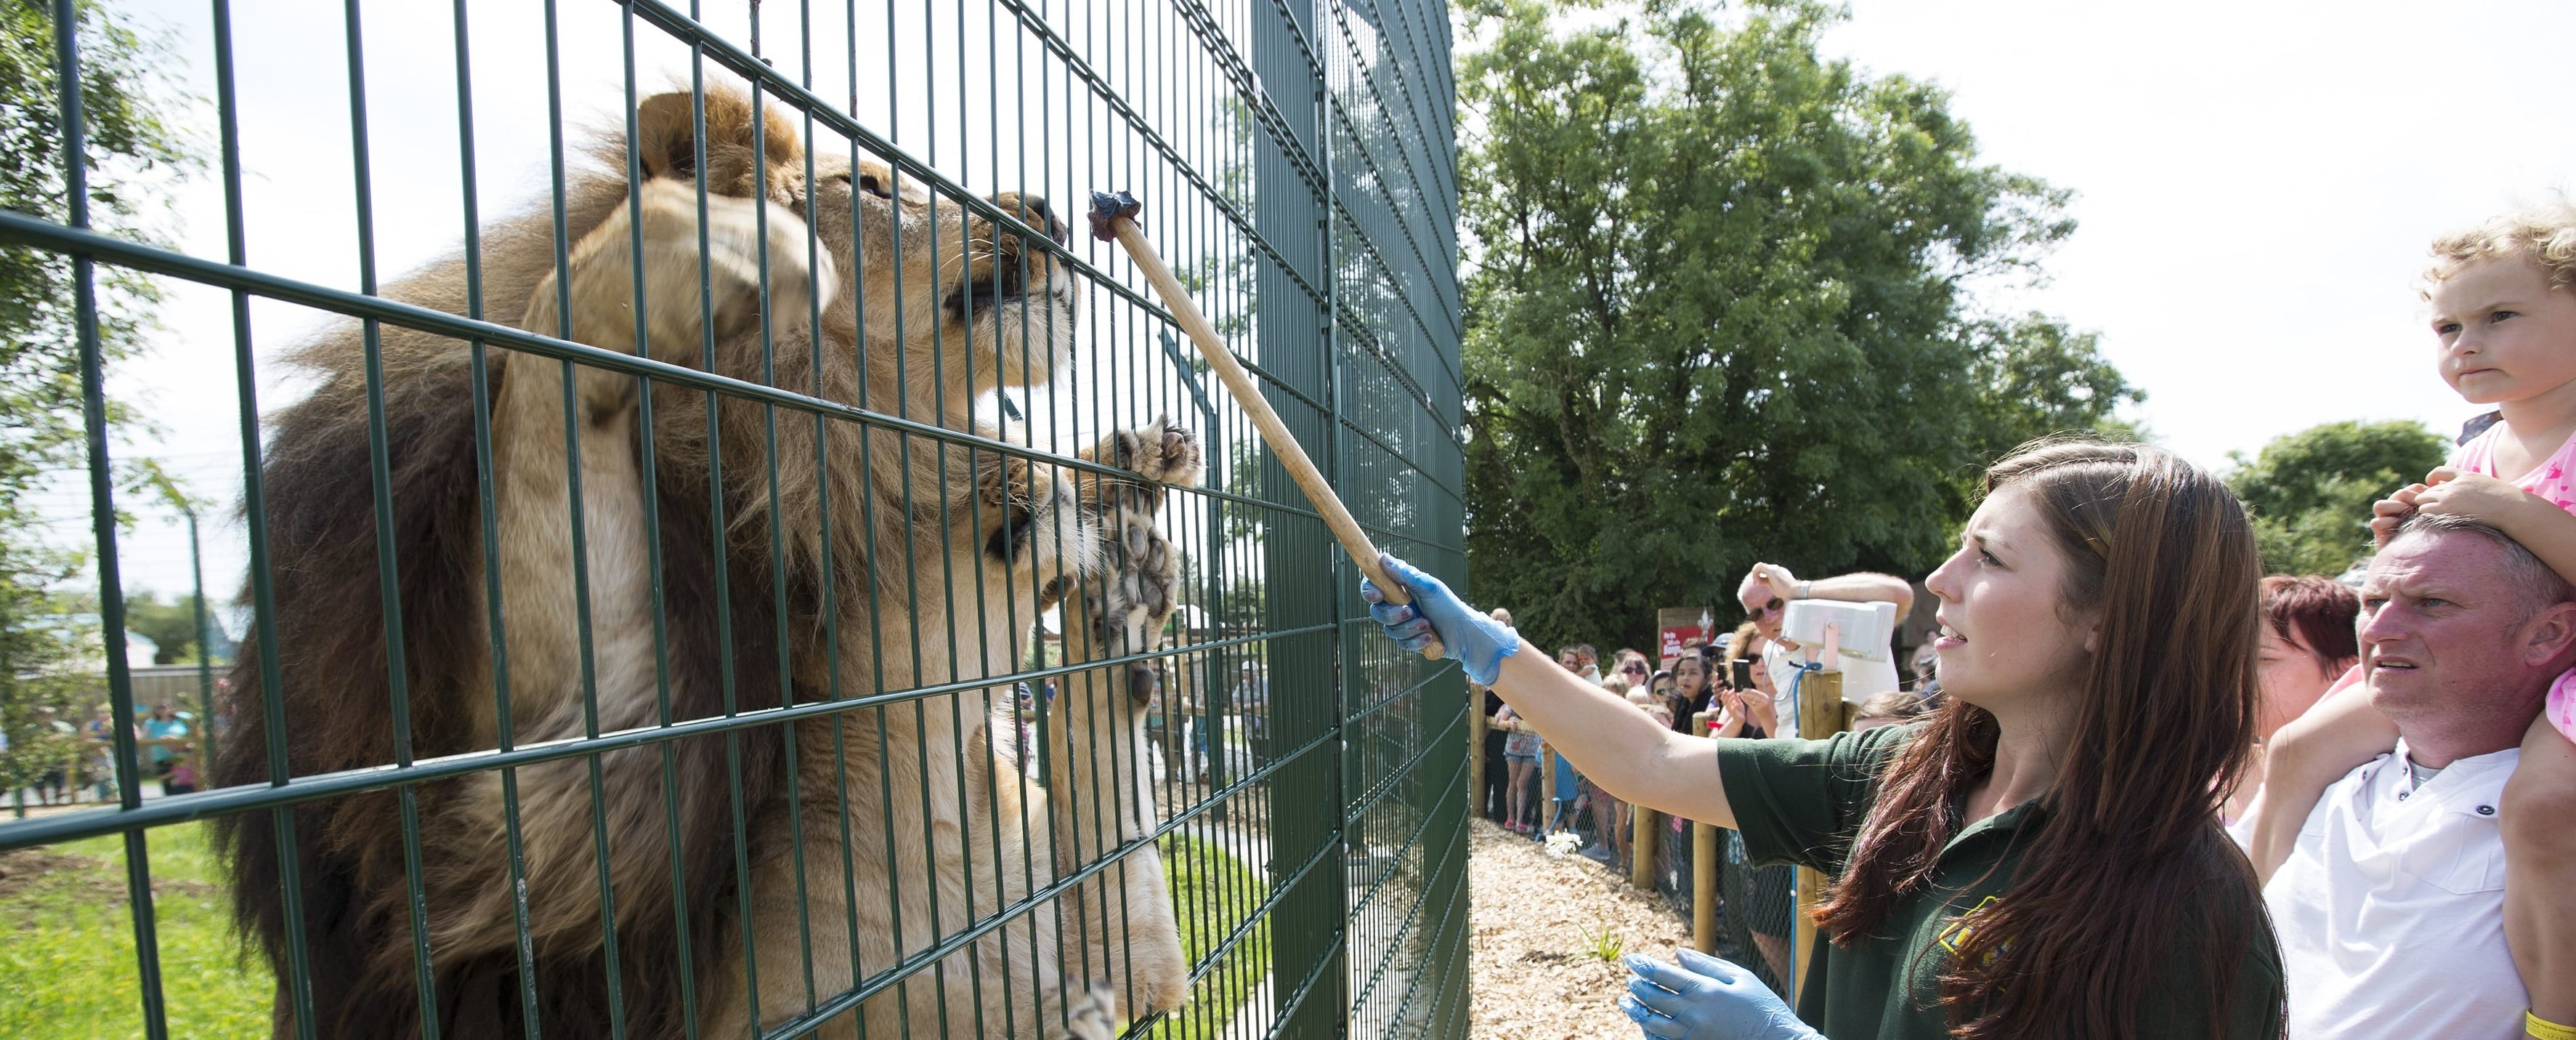 Lion keeper feeding the lions